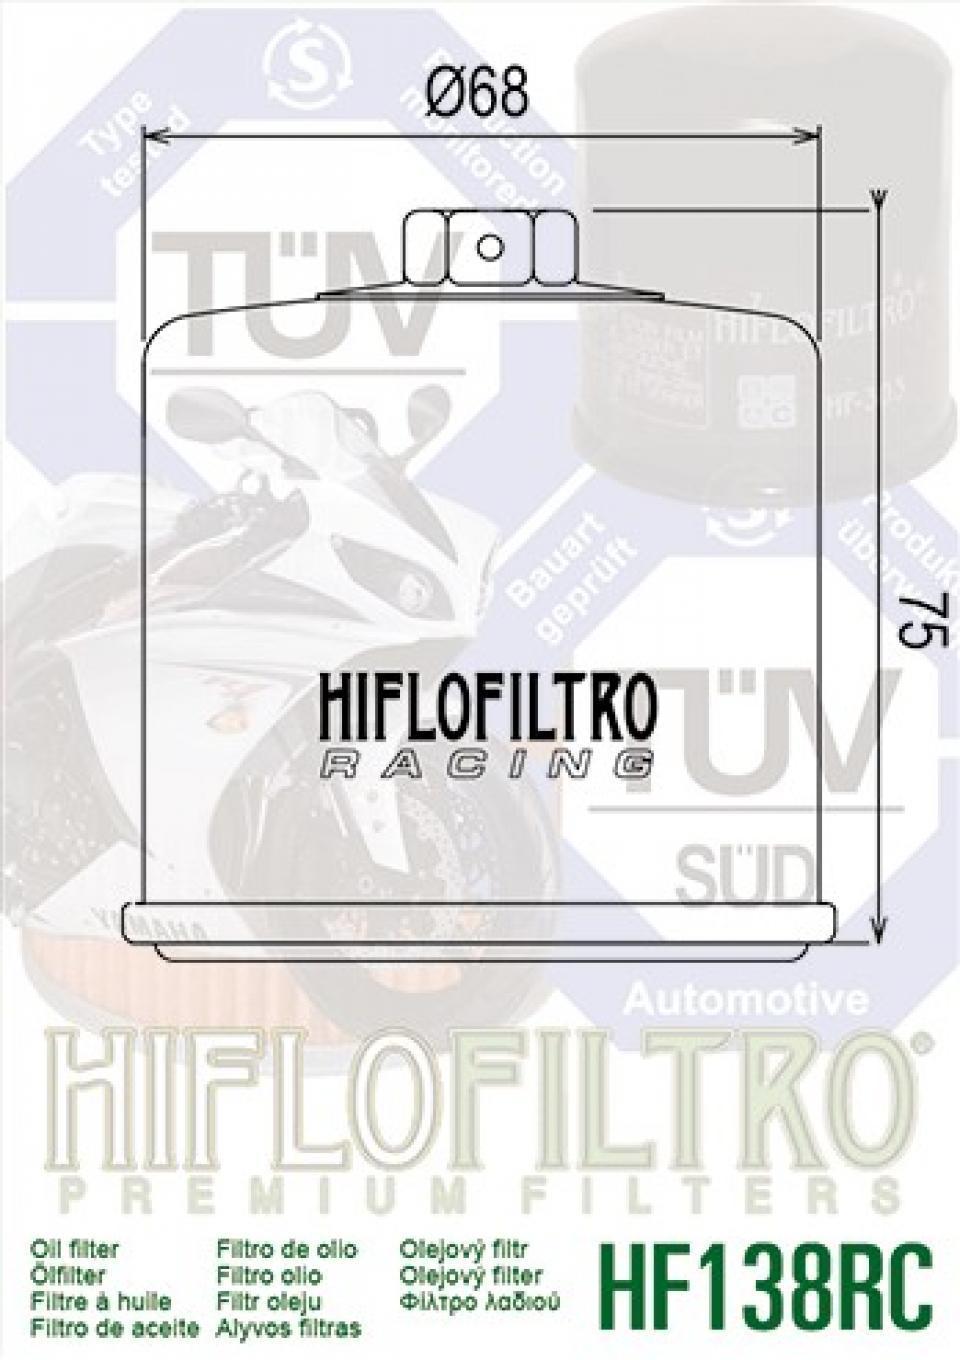 Filtre à huile Hiflofiltro pour Moto Suzuki 650 Gsf Bandit N Abs 2005 à 2006 HF138RC Neuf